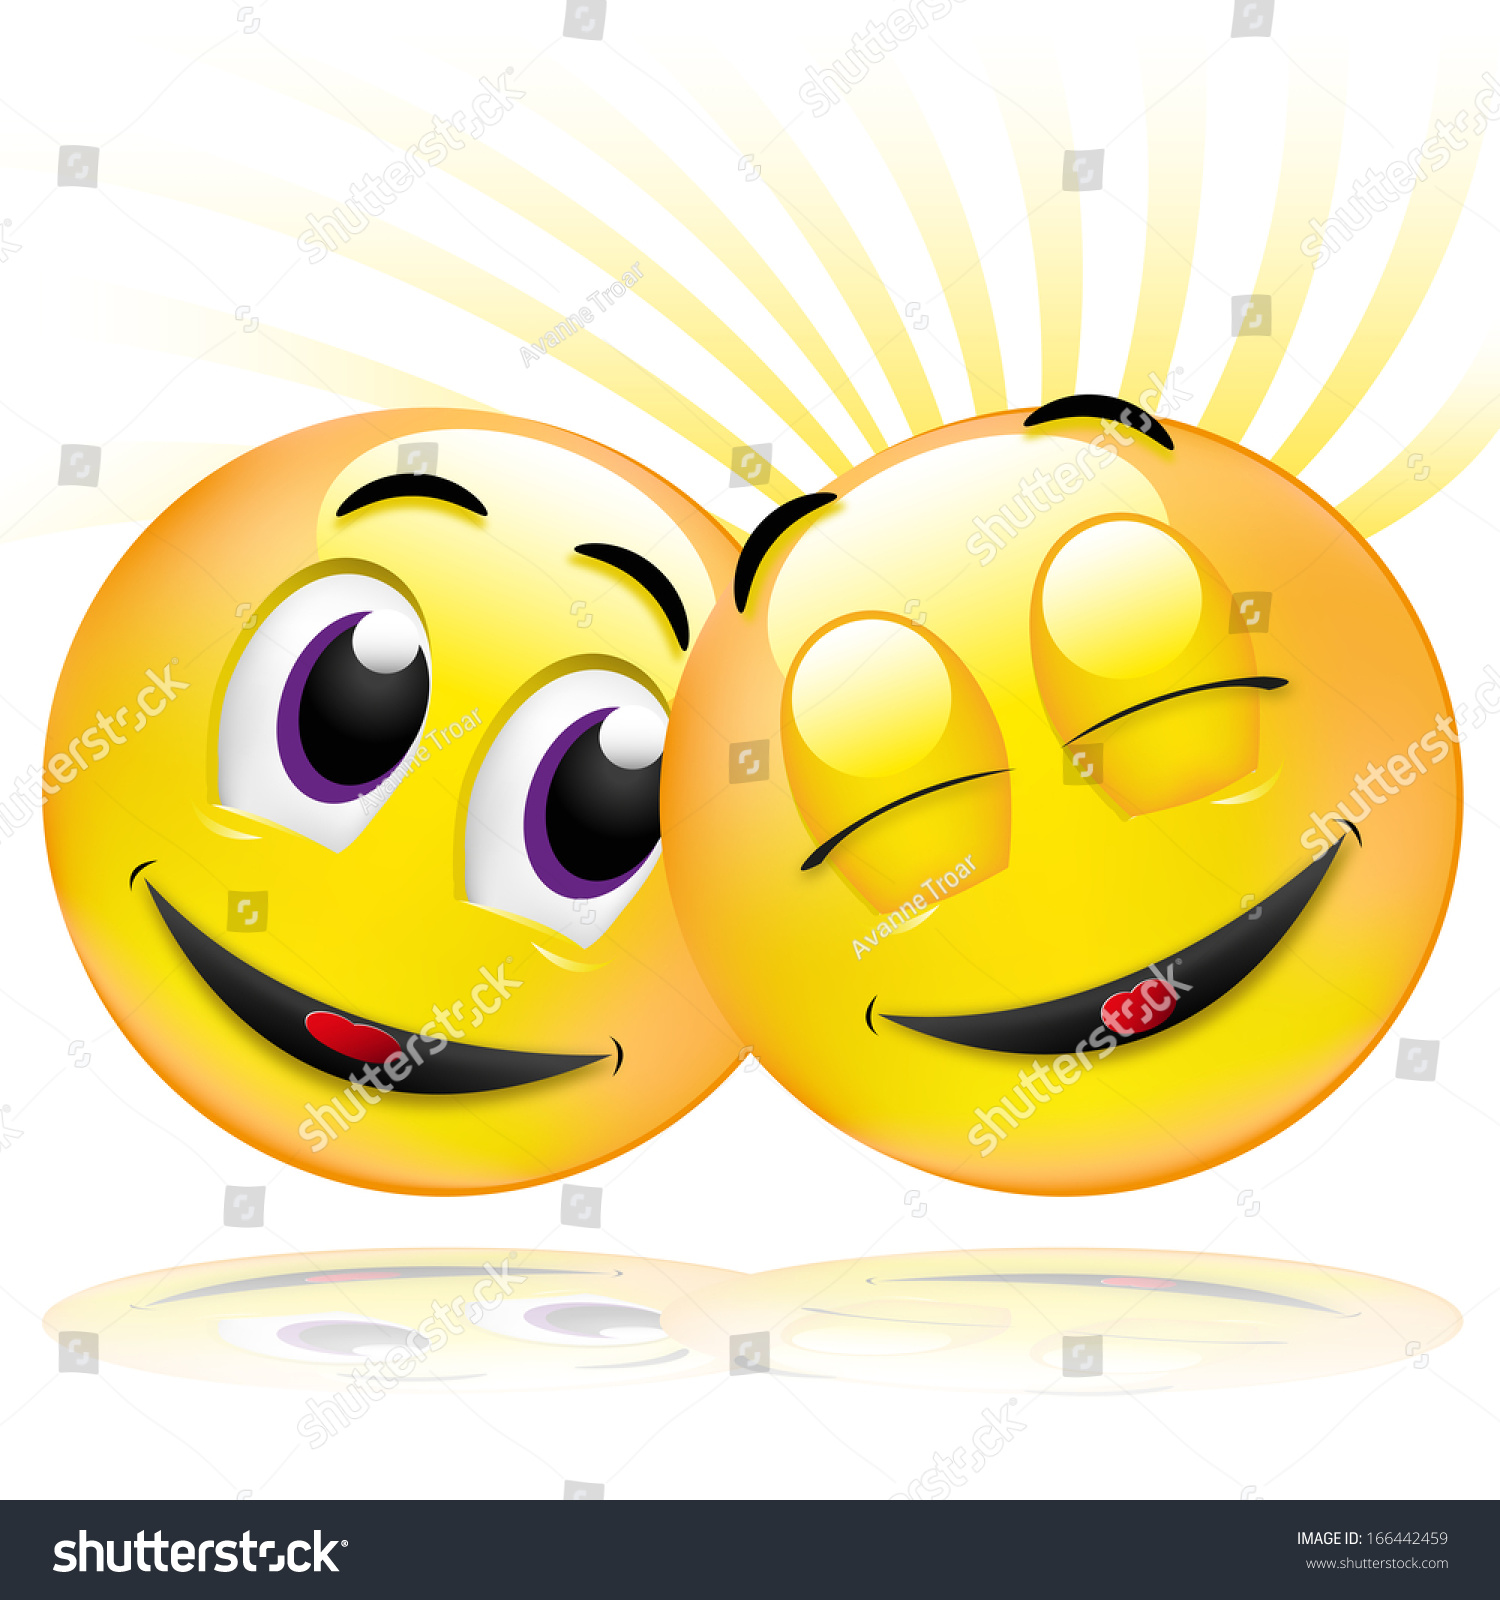 Two Smiley Friends Stock Illustration 166442459 - Shutterstock